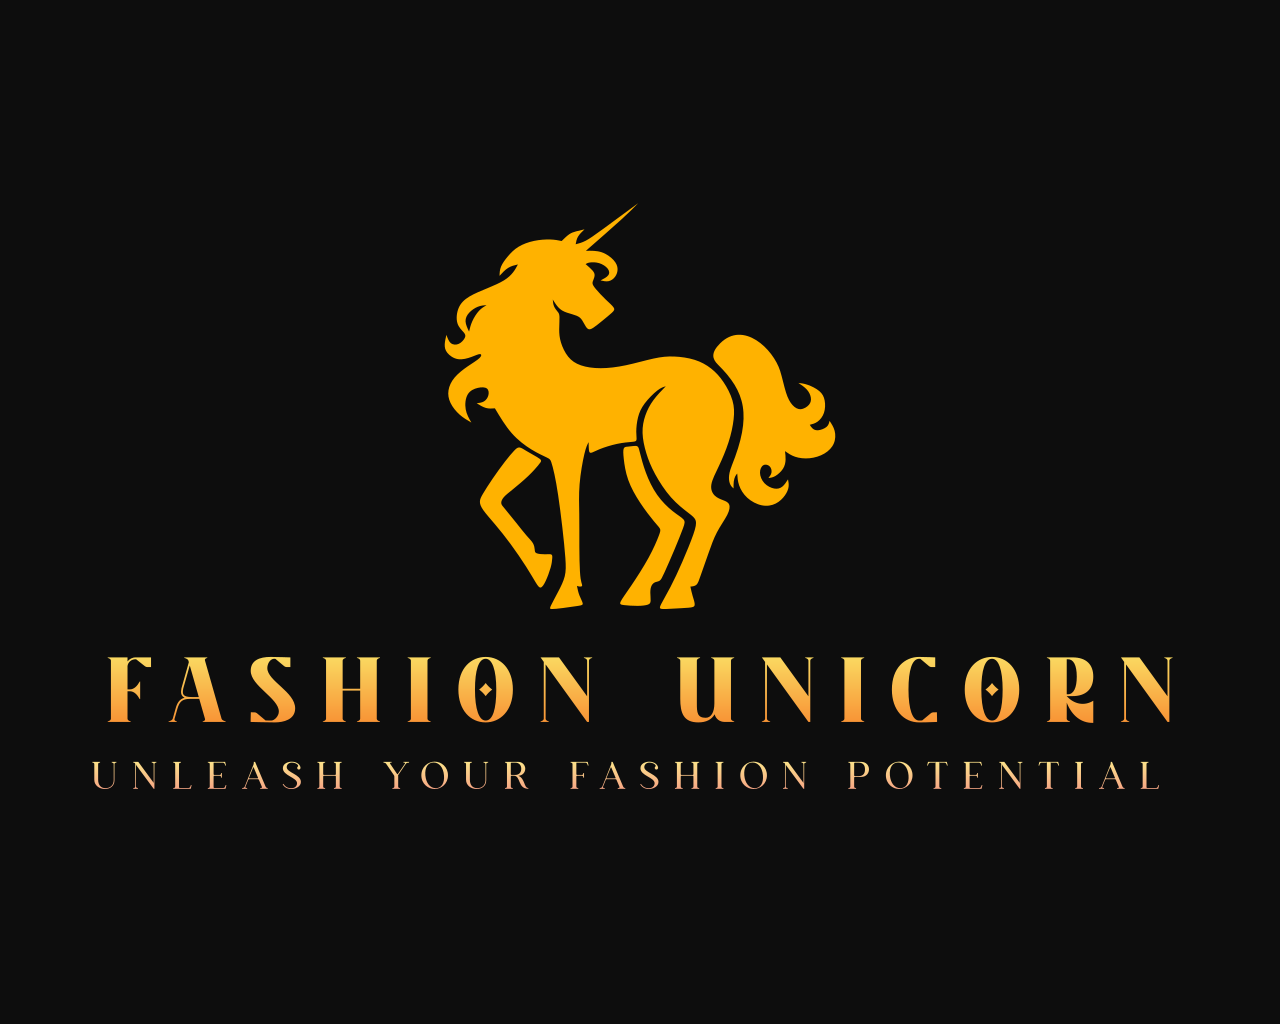 The Fashion Unicorn